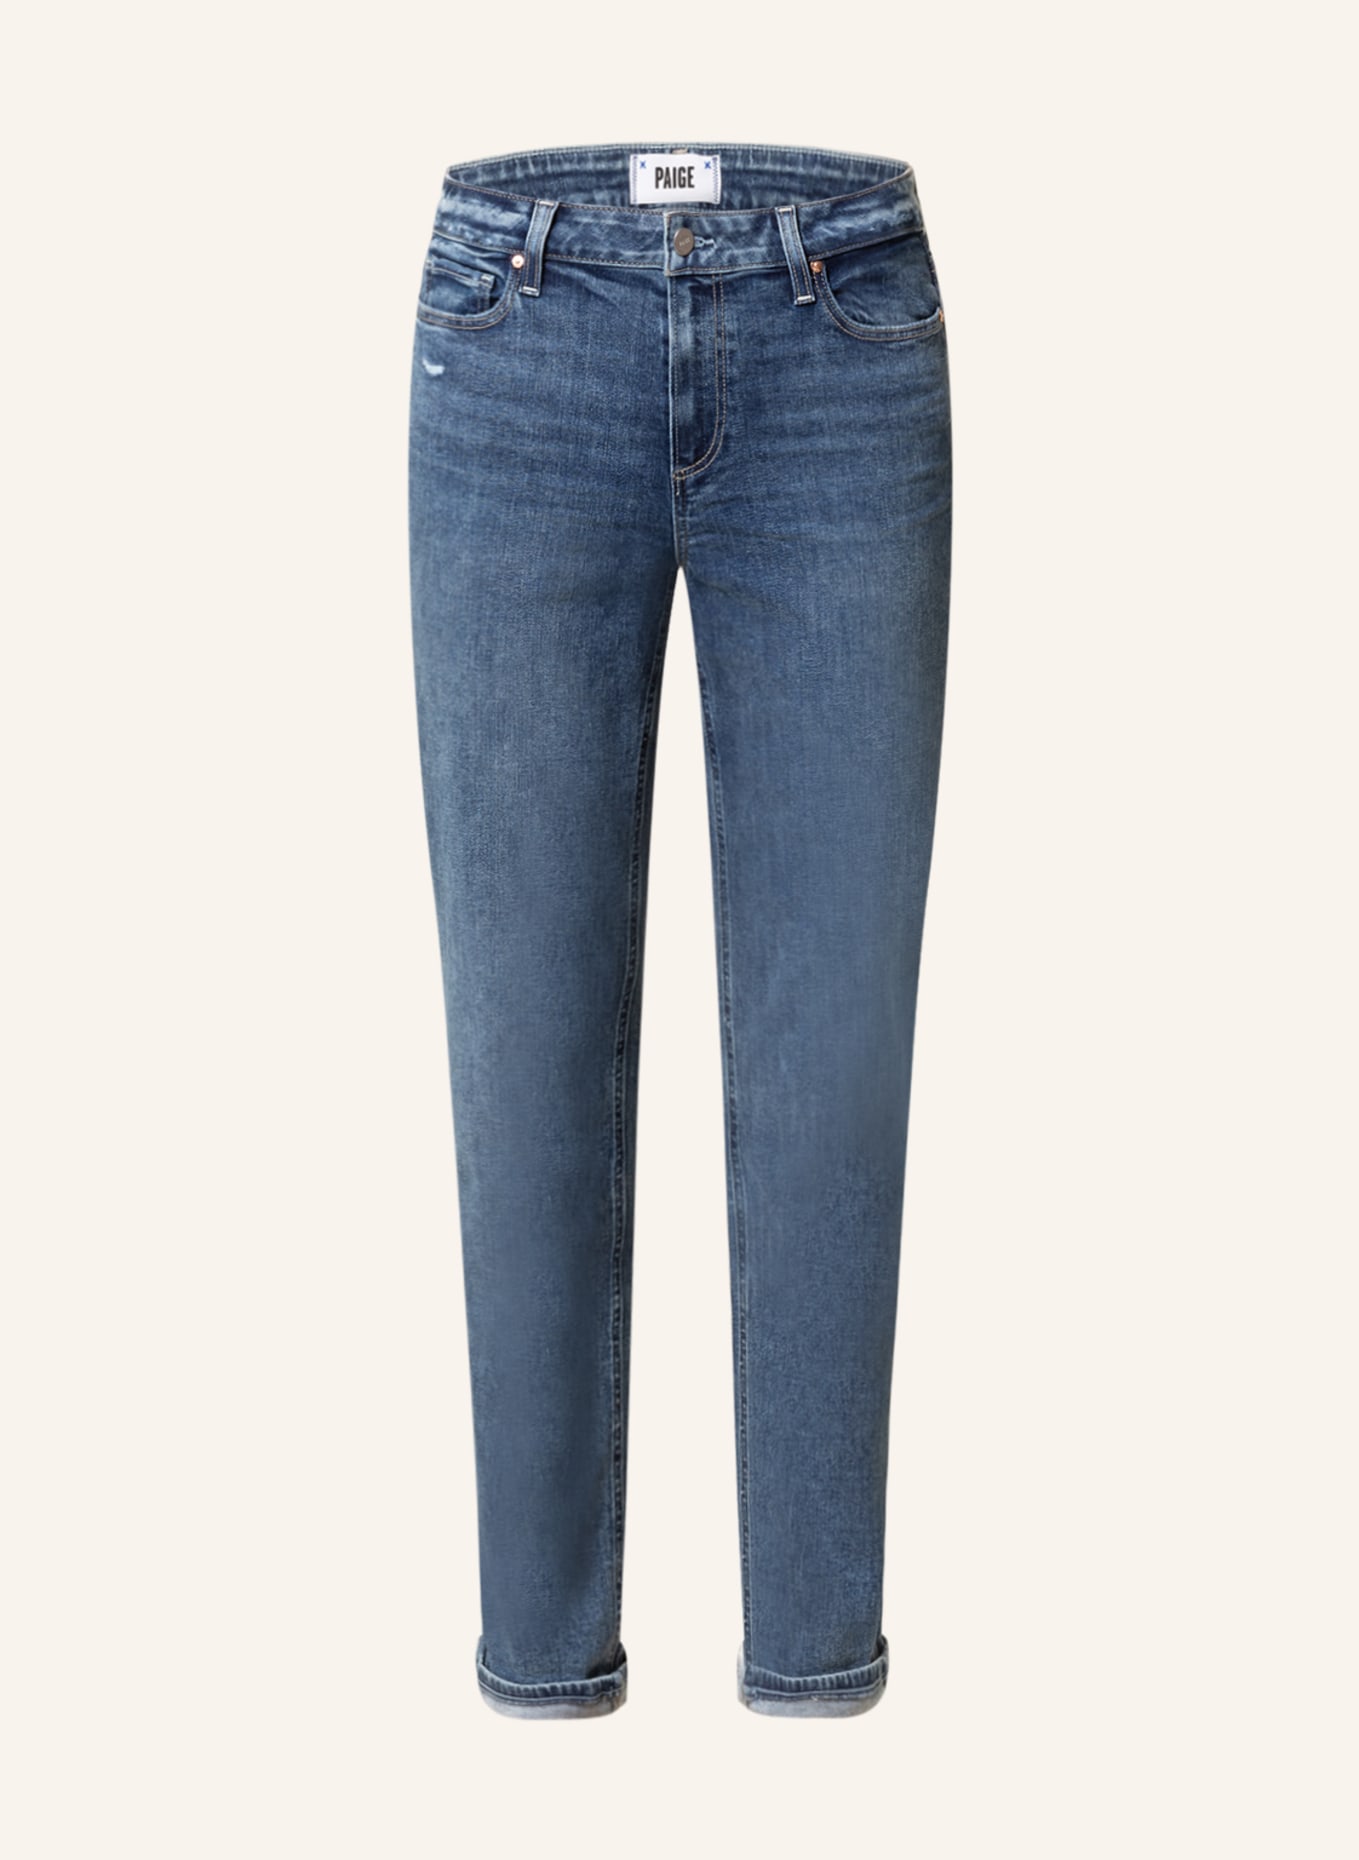 PAIGE Skinny Jeans BRIGITTE, Farbe: W8140 ORNATE DISTRESSED (Bild 1)